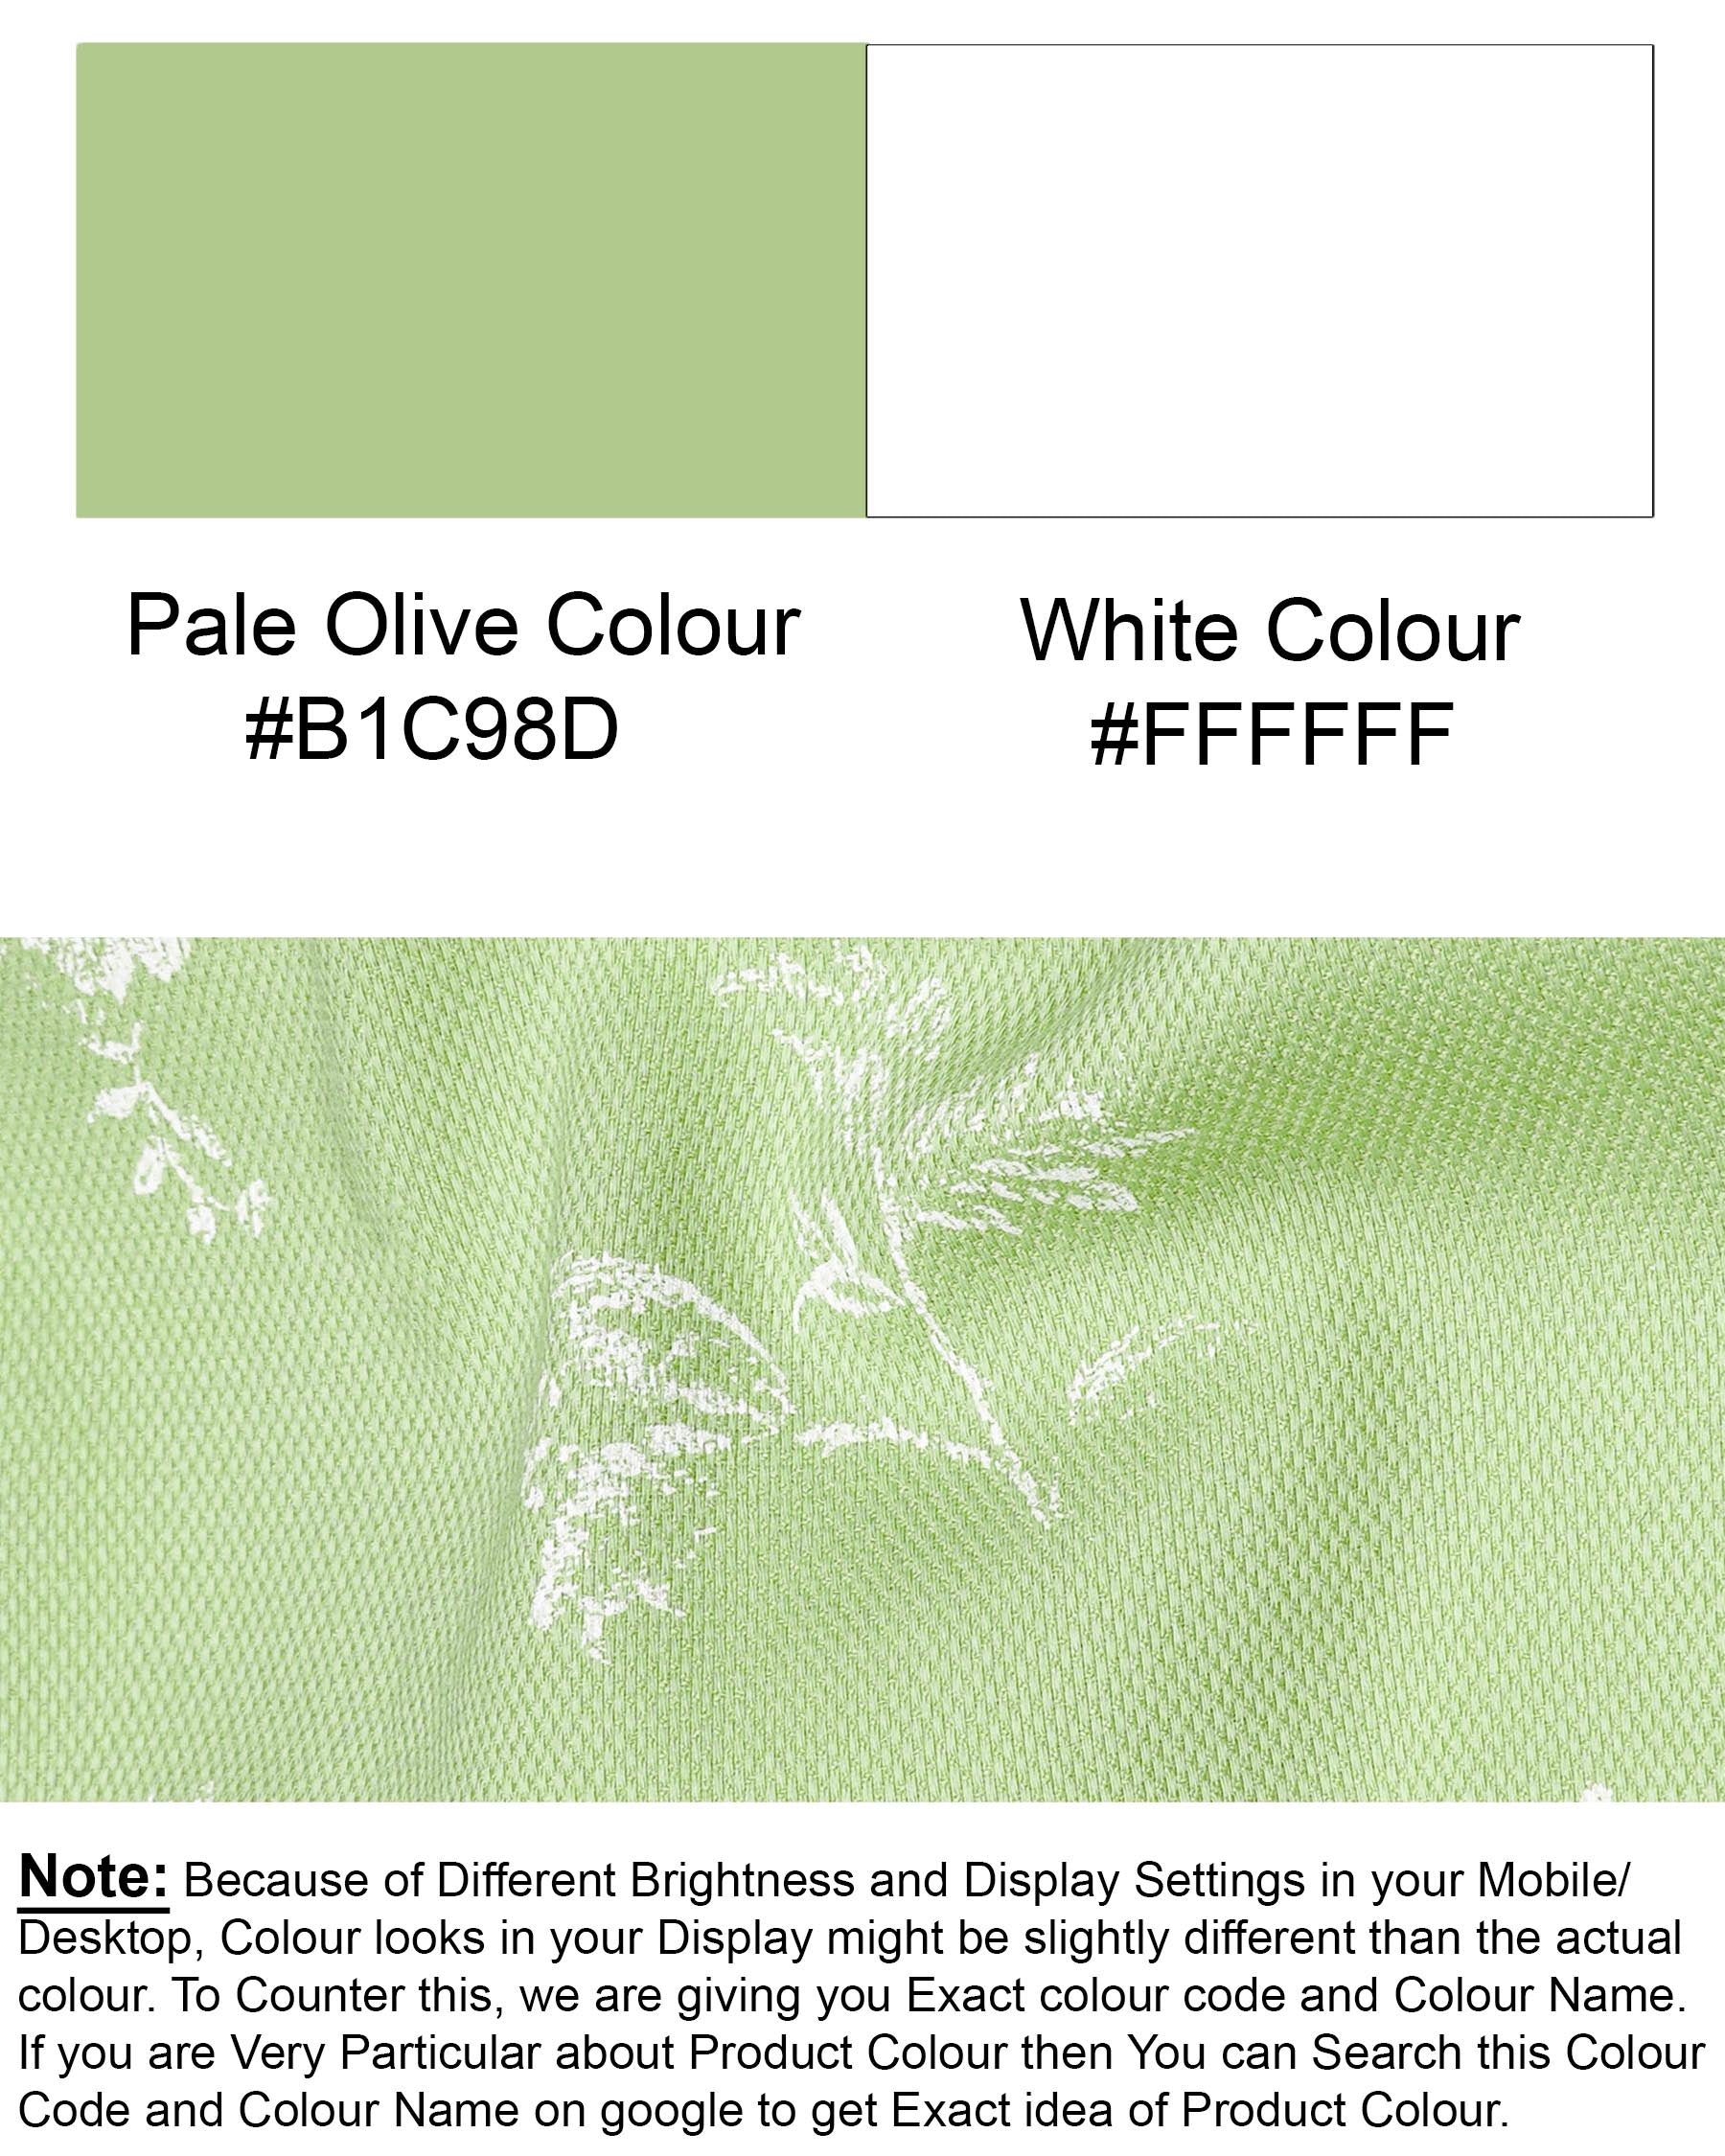 Pale Olive Green With White Floral Dobby Textured Premium Giza Cotton Shirt 7439-BD-38, 7439-BD-H-38, 7439-BD-39, 7439-BD-H-39, 7439-BD-40, 7439-BD-H-40, 7439-BD-42, 7439-BD-H-42, 7439-BD-44, 7439-BD-H-44, 7439-BD-46, 7439-BD-H-46, 7439-BD-48, 7439-BD-H-48, 7439-BD-50, 7439-BD-H-50, 7439-BD-52, 7439-BD-H-52